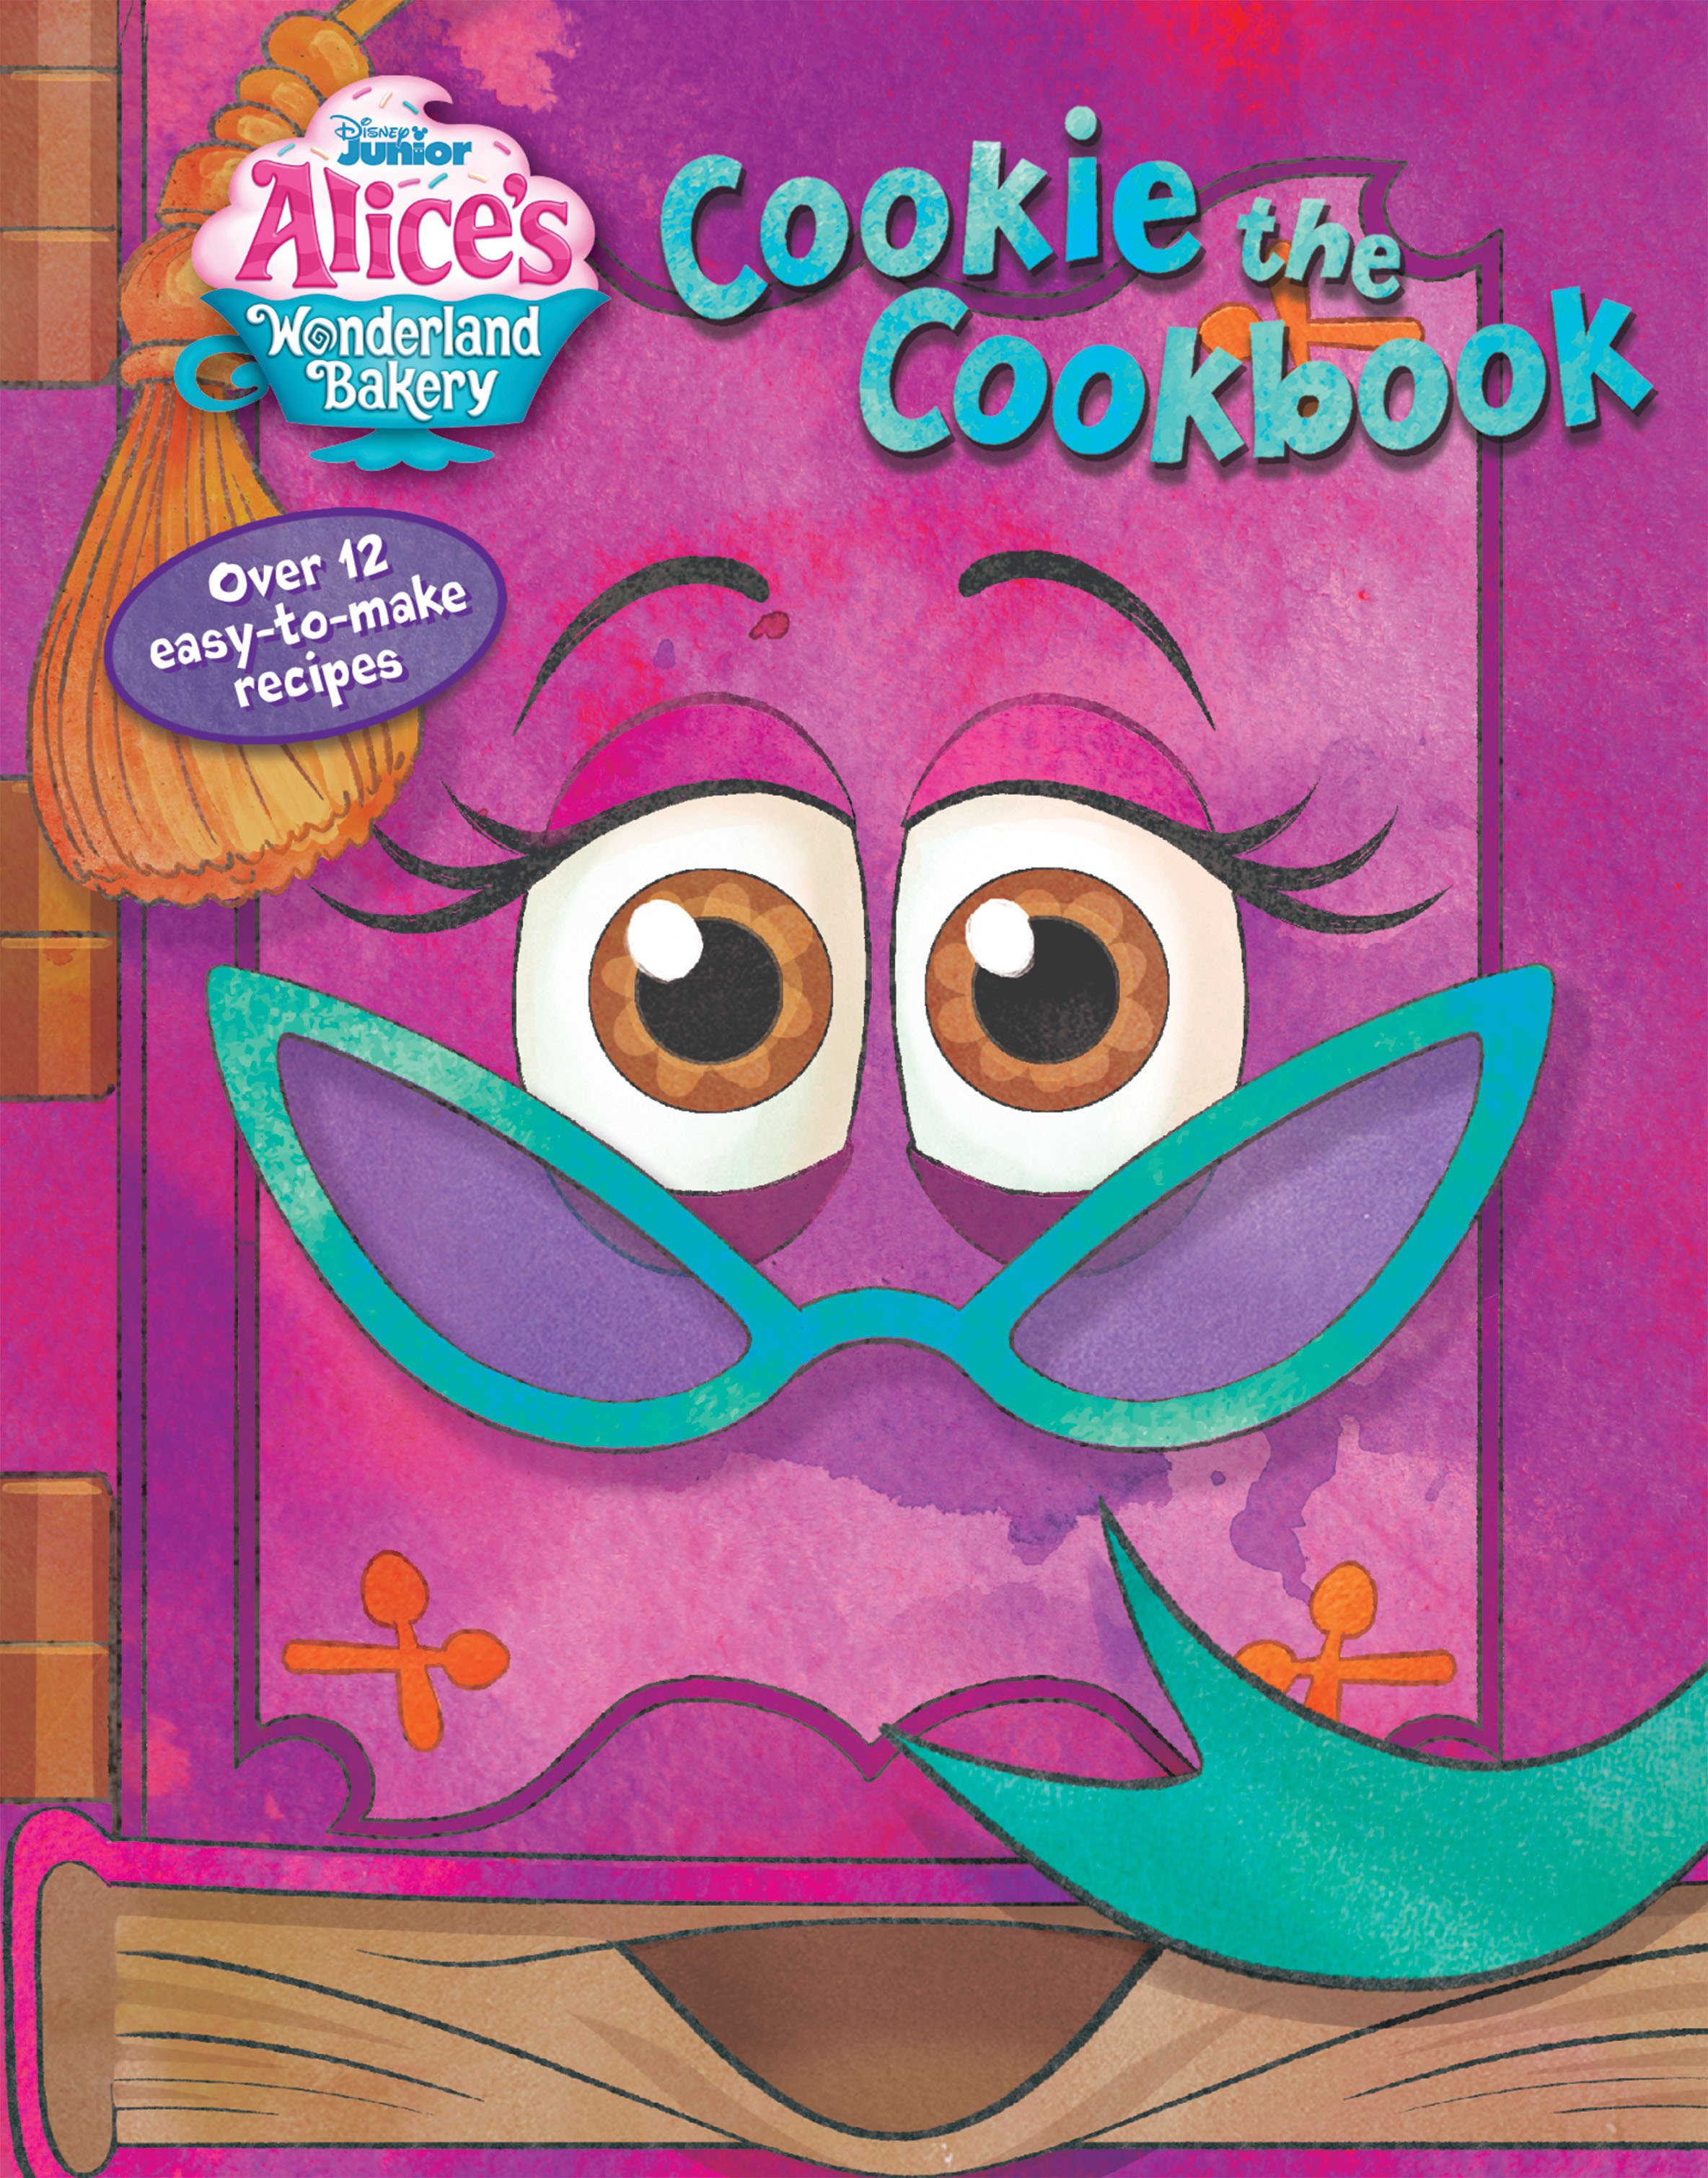 Alice's Wonderland Bakery: Cookie The Cookbook